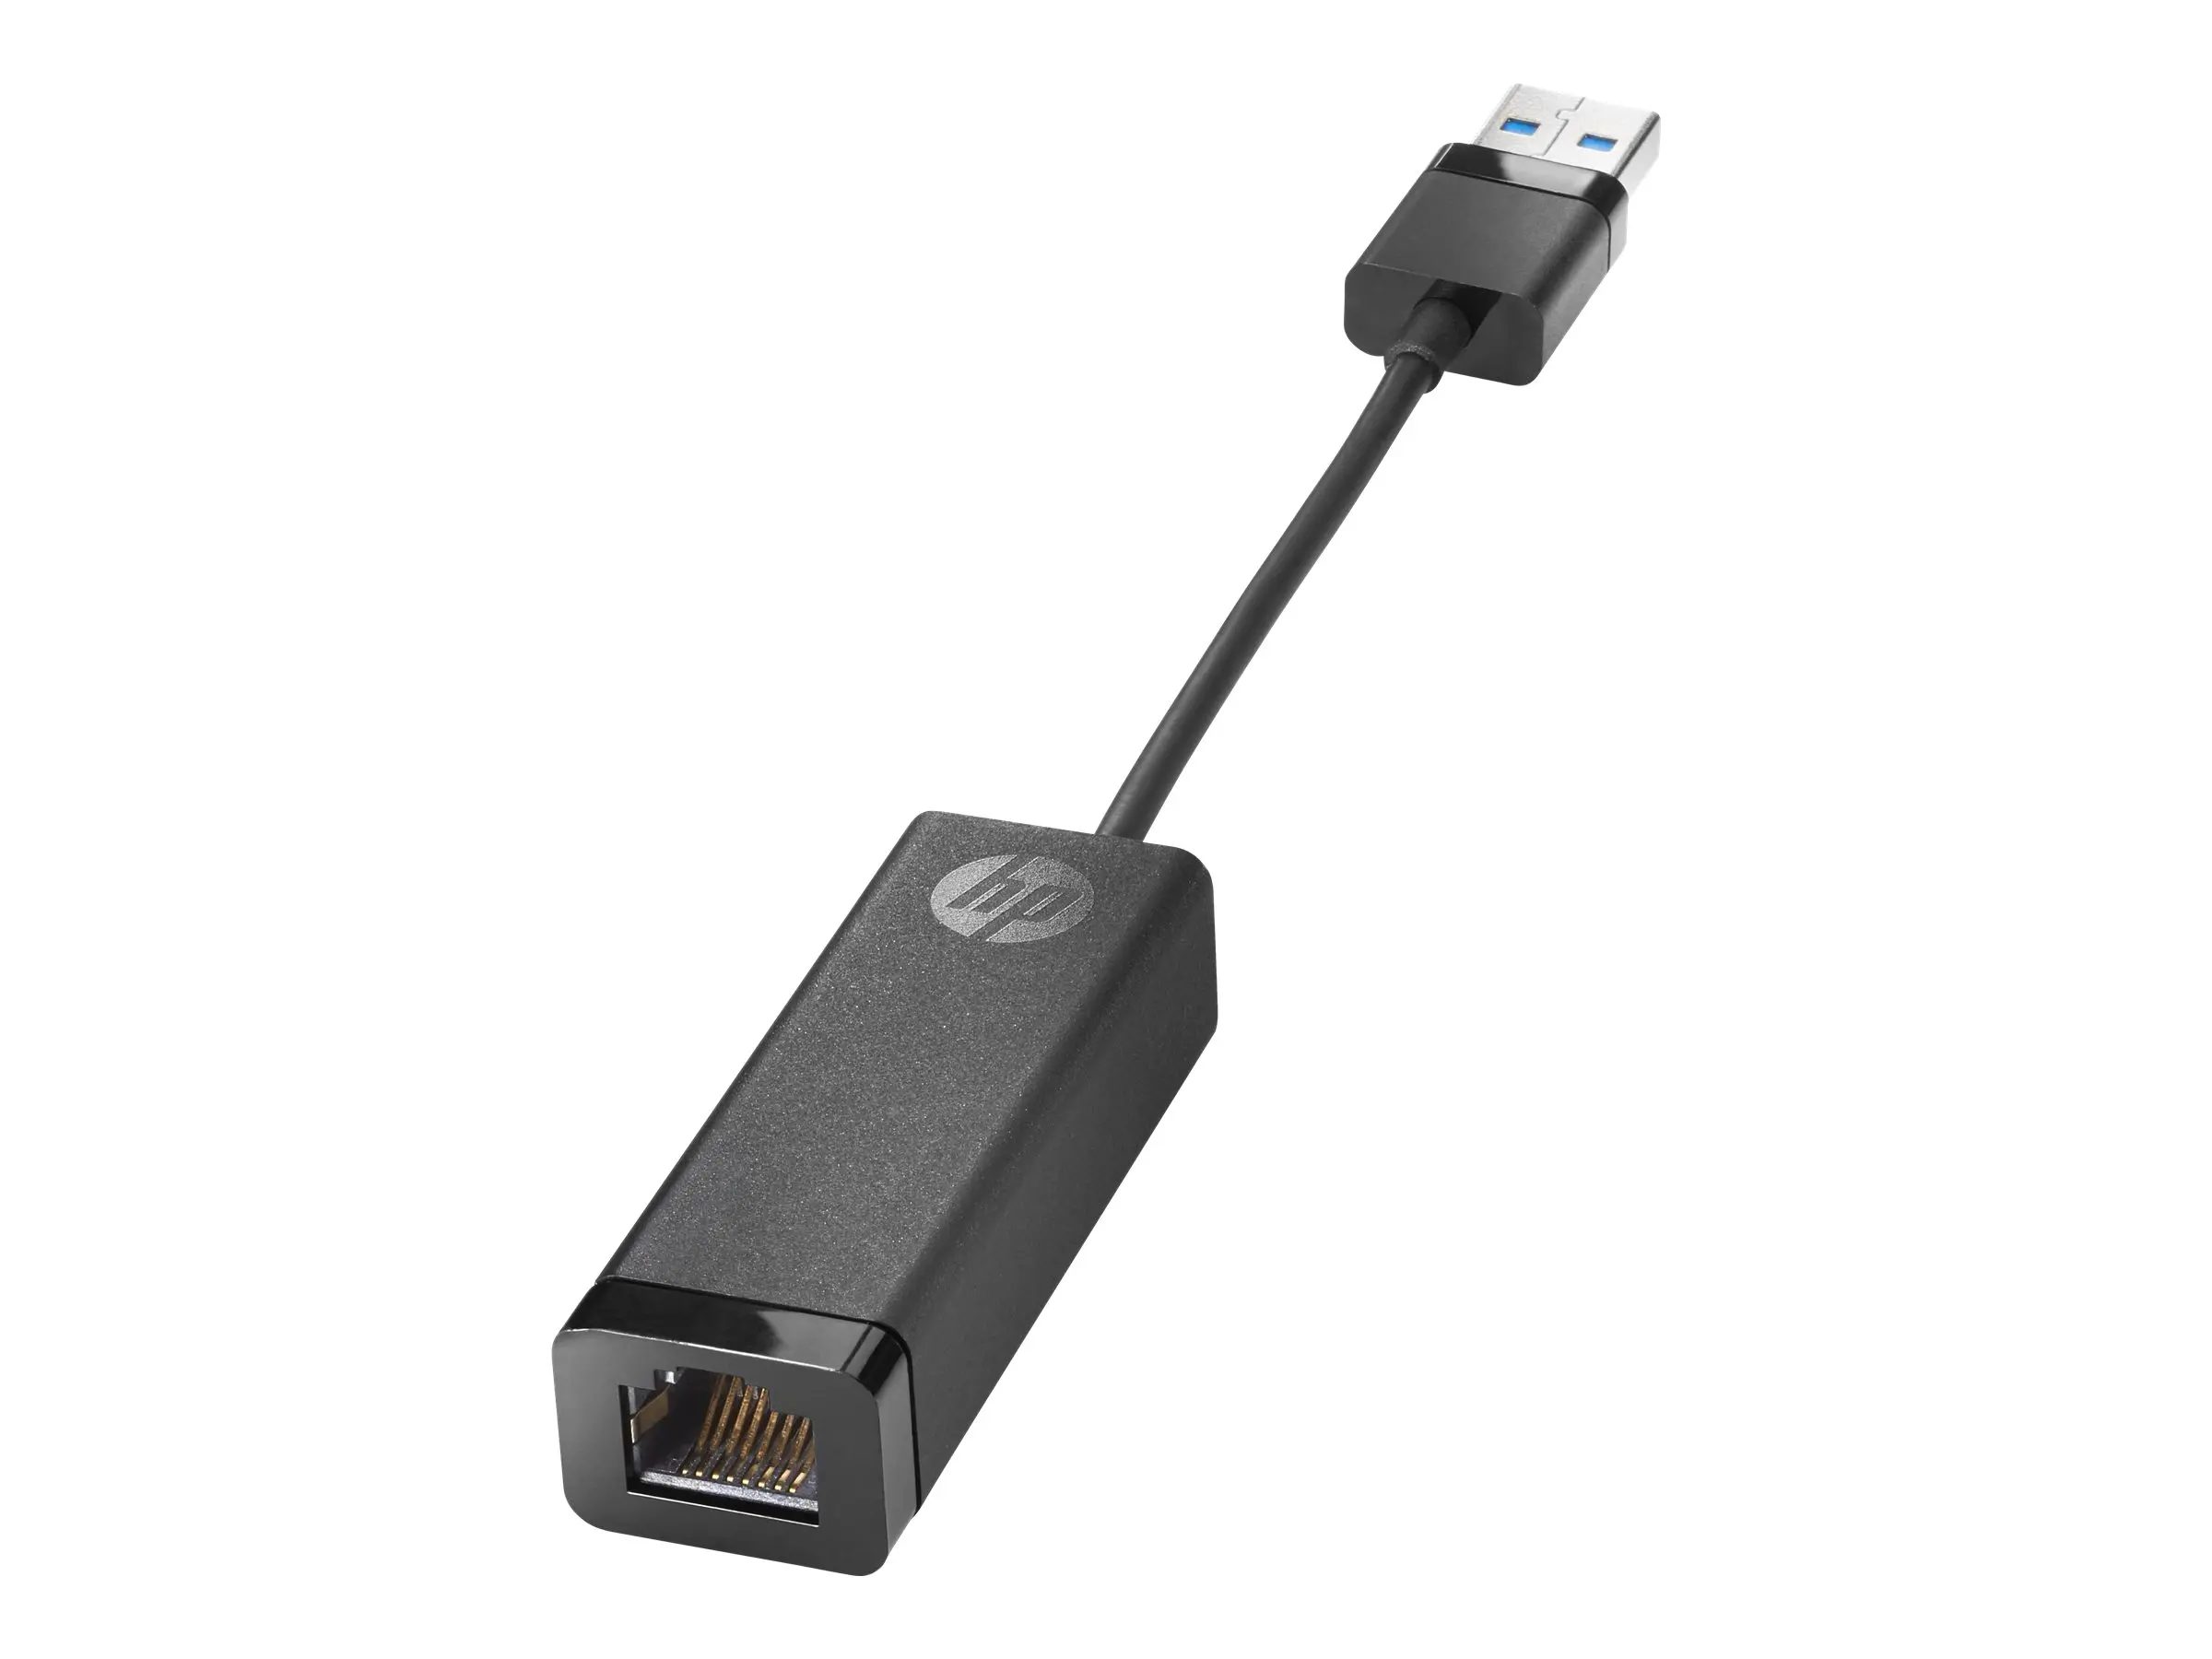 HP USB 3.0 to Gig RJ45 Adapter G2 - image 1